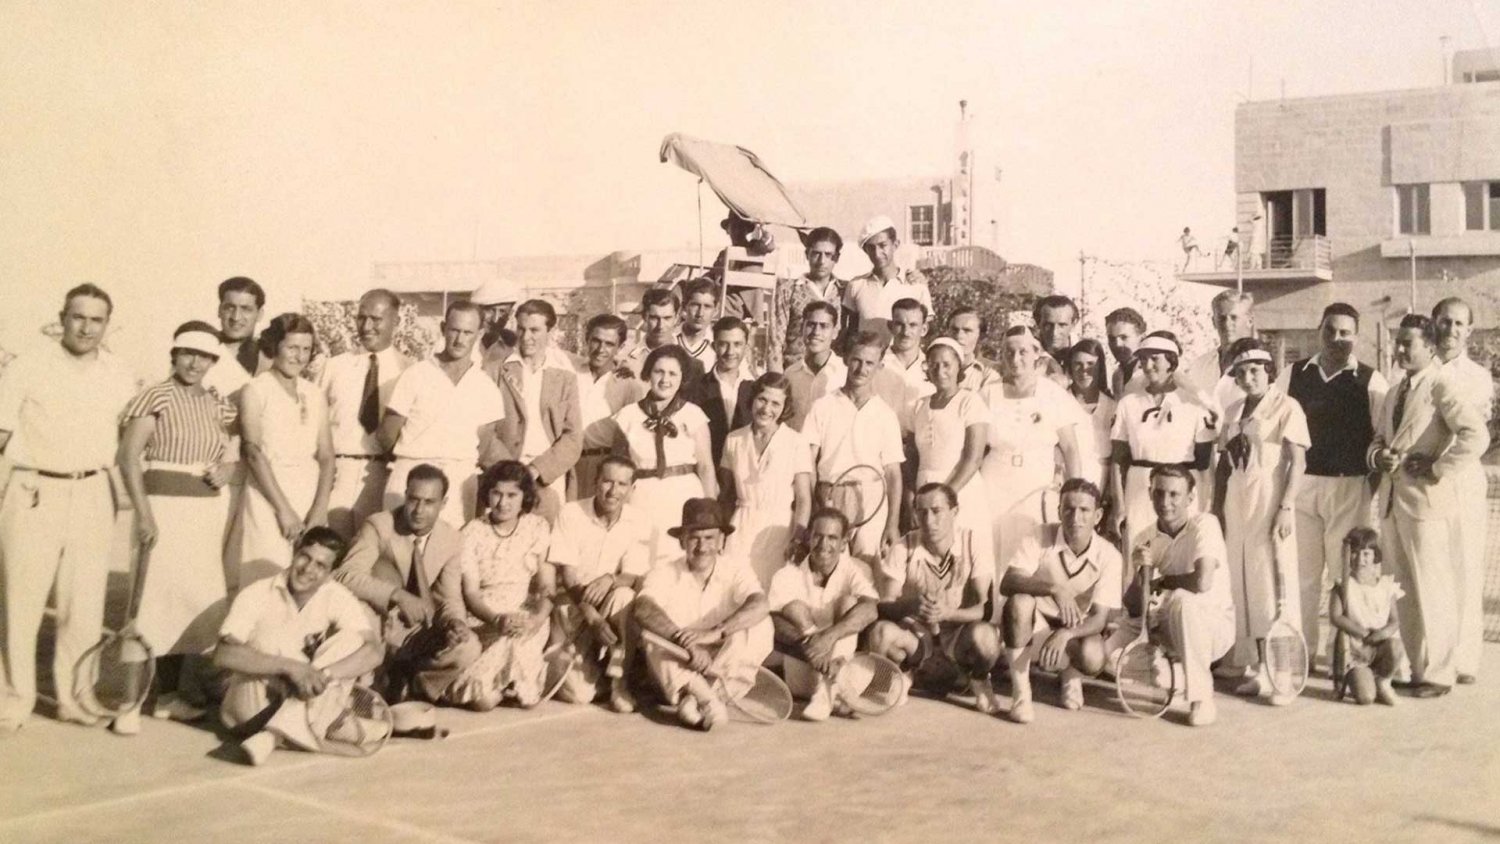 Jerusalem YMCA Tennis Team, photo taken in the late 1930s